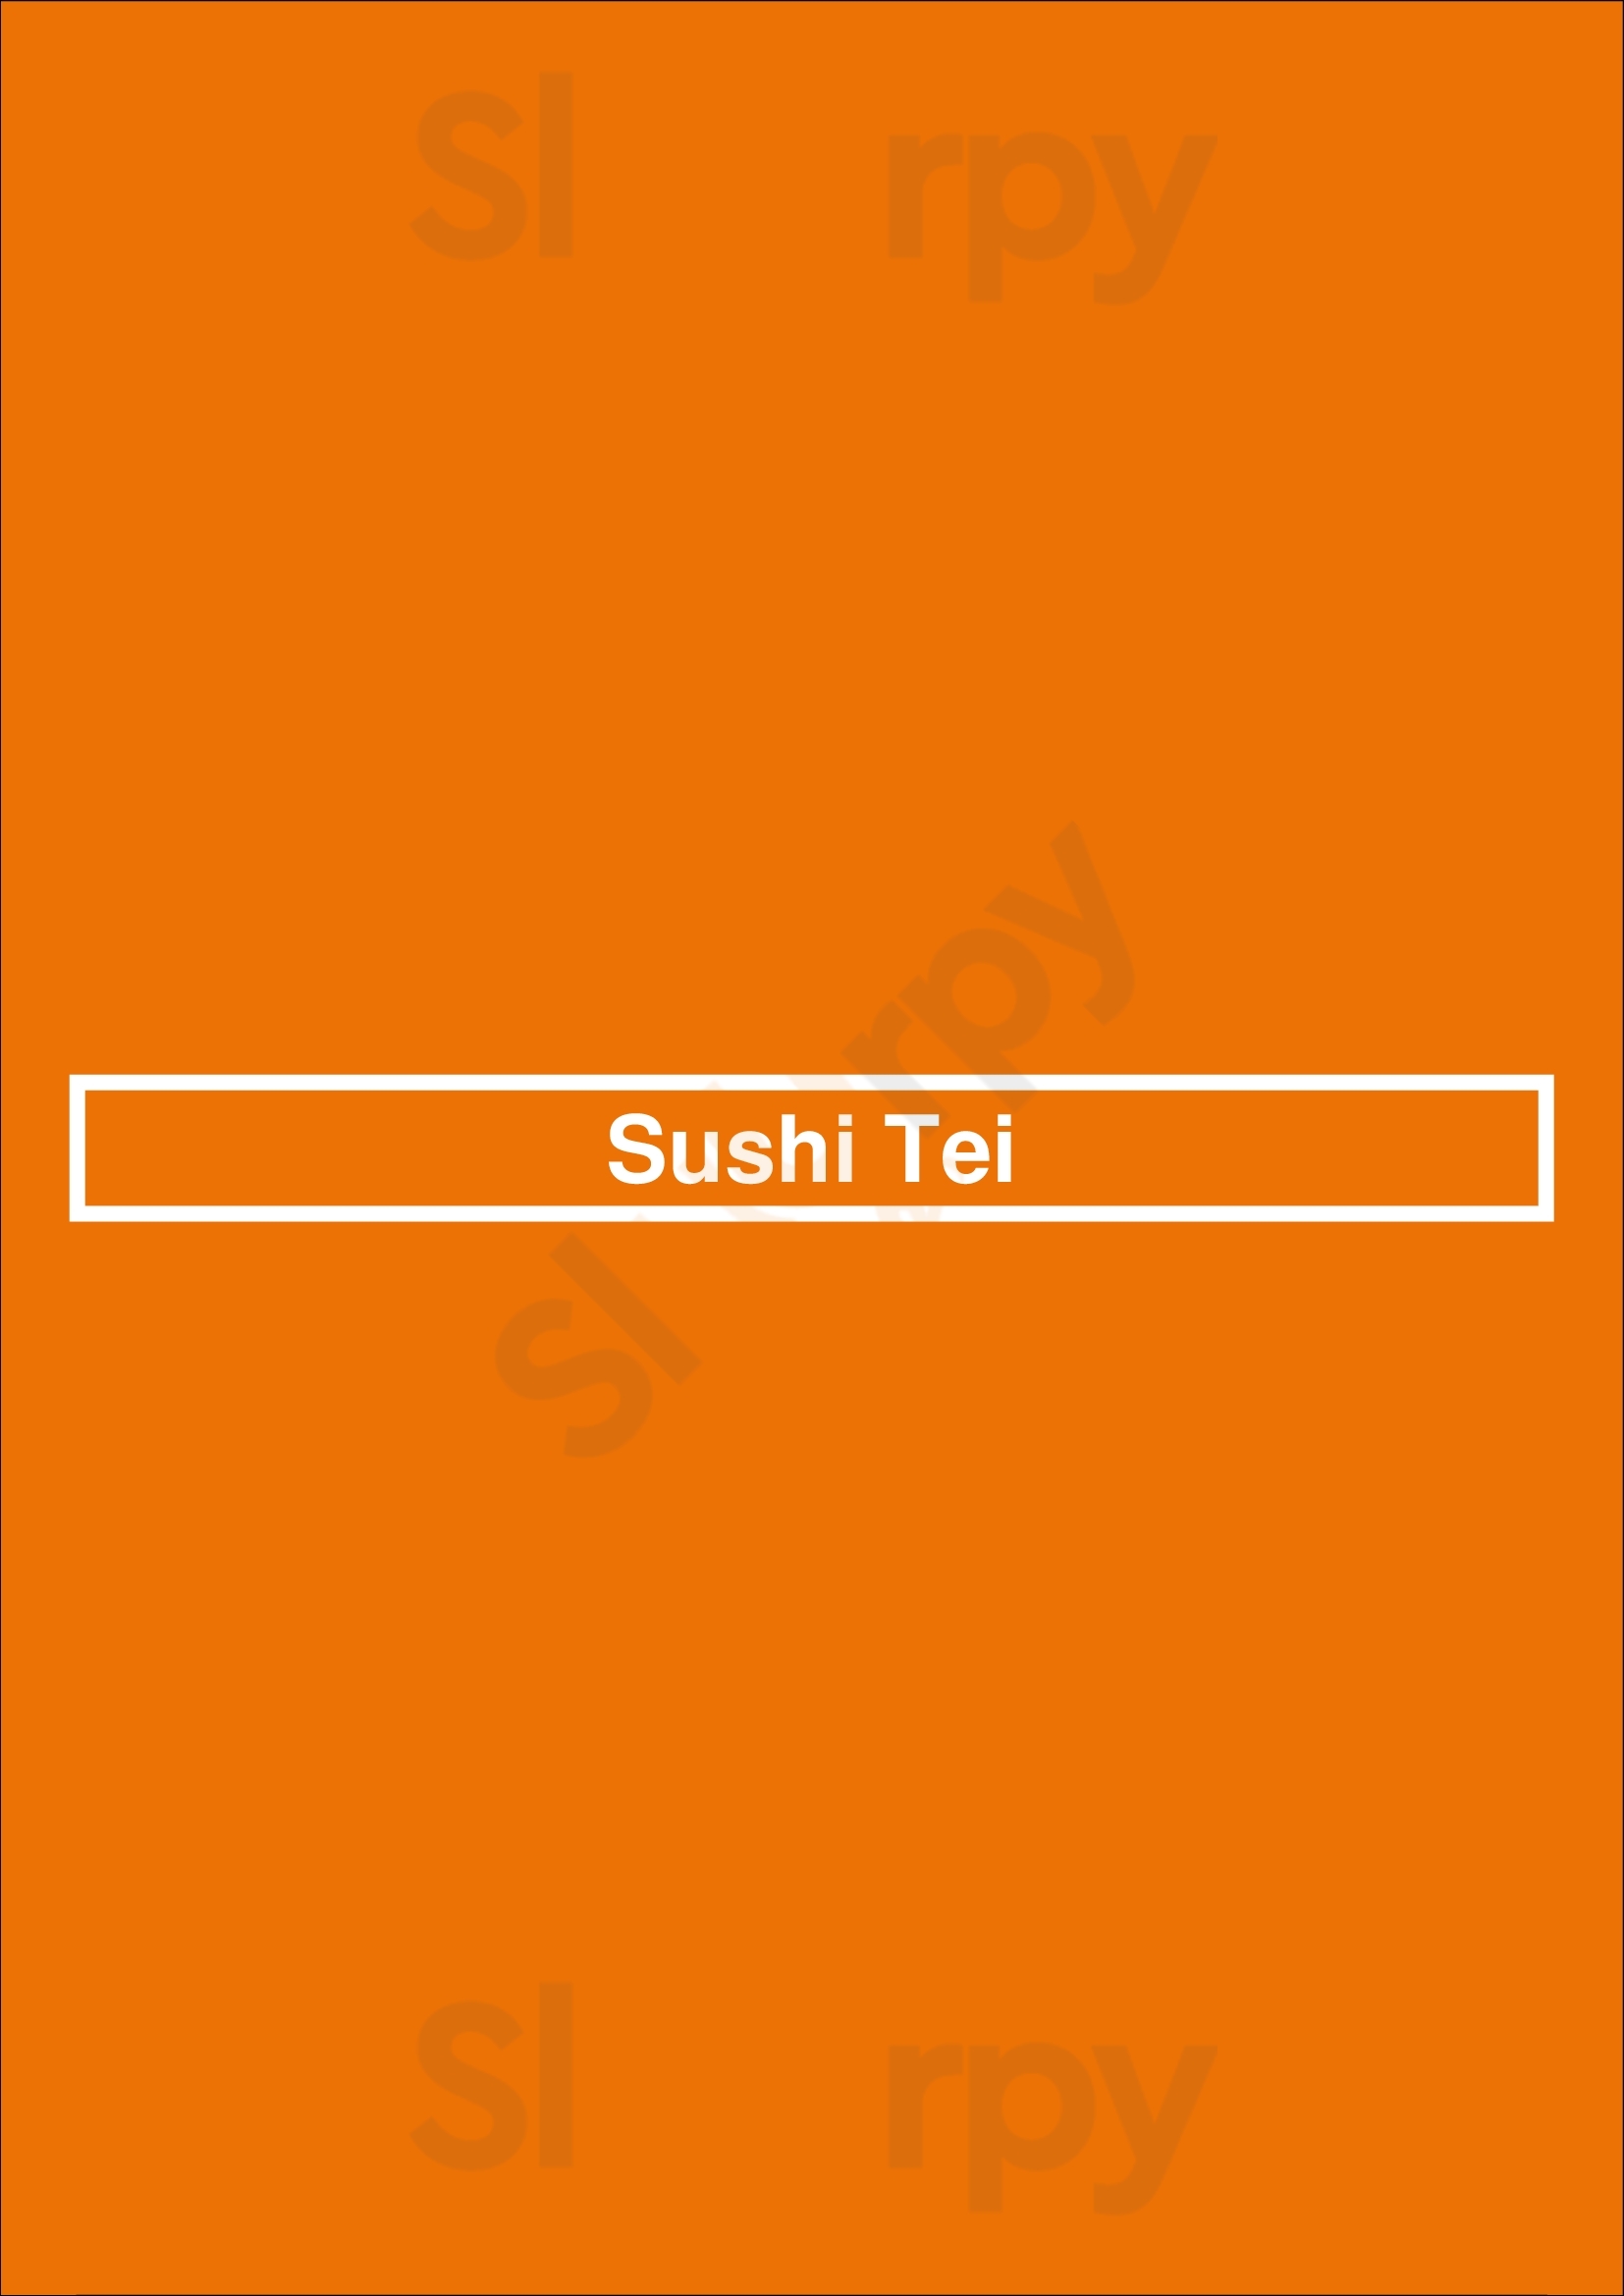 Sushi Tei Waterloo Menu - 1